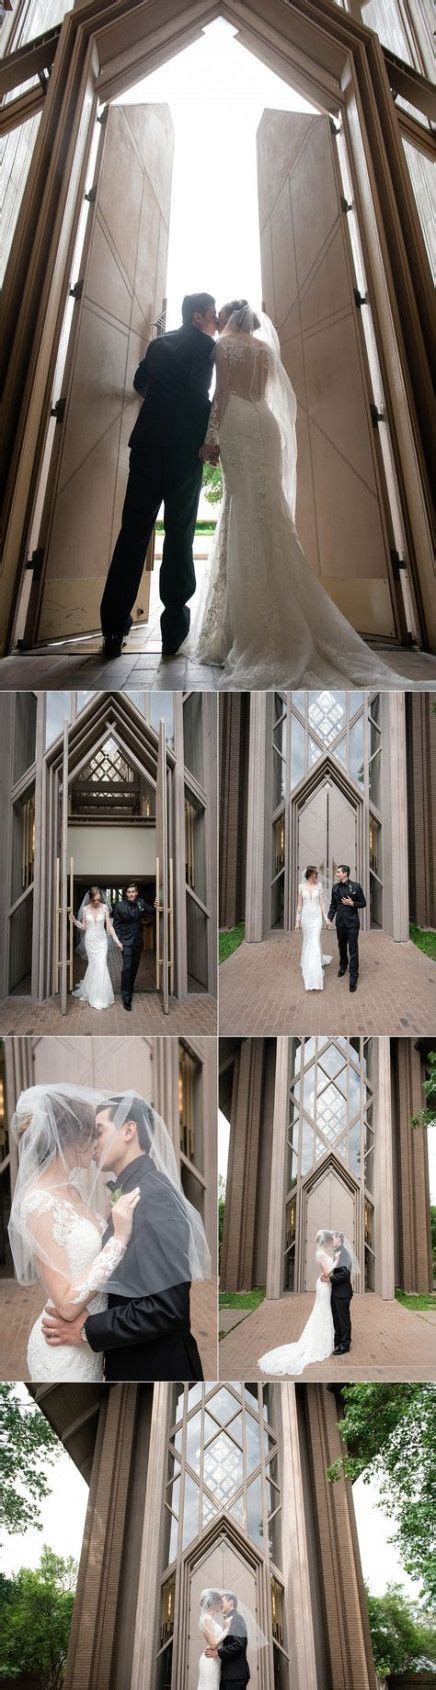 New Wedding Church Photography Entrance 58 Ideas